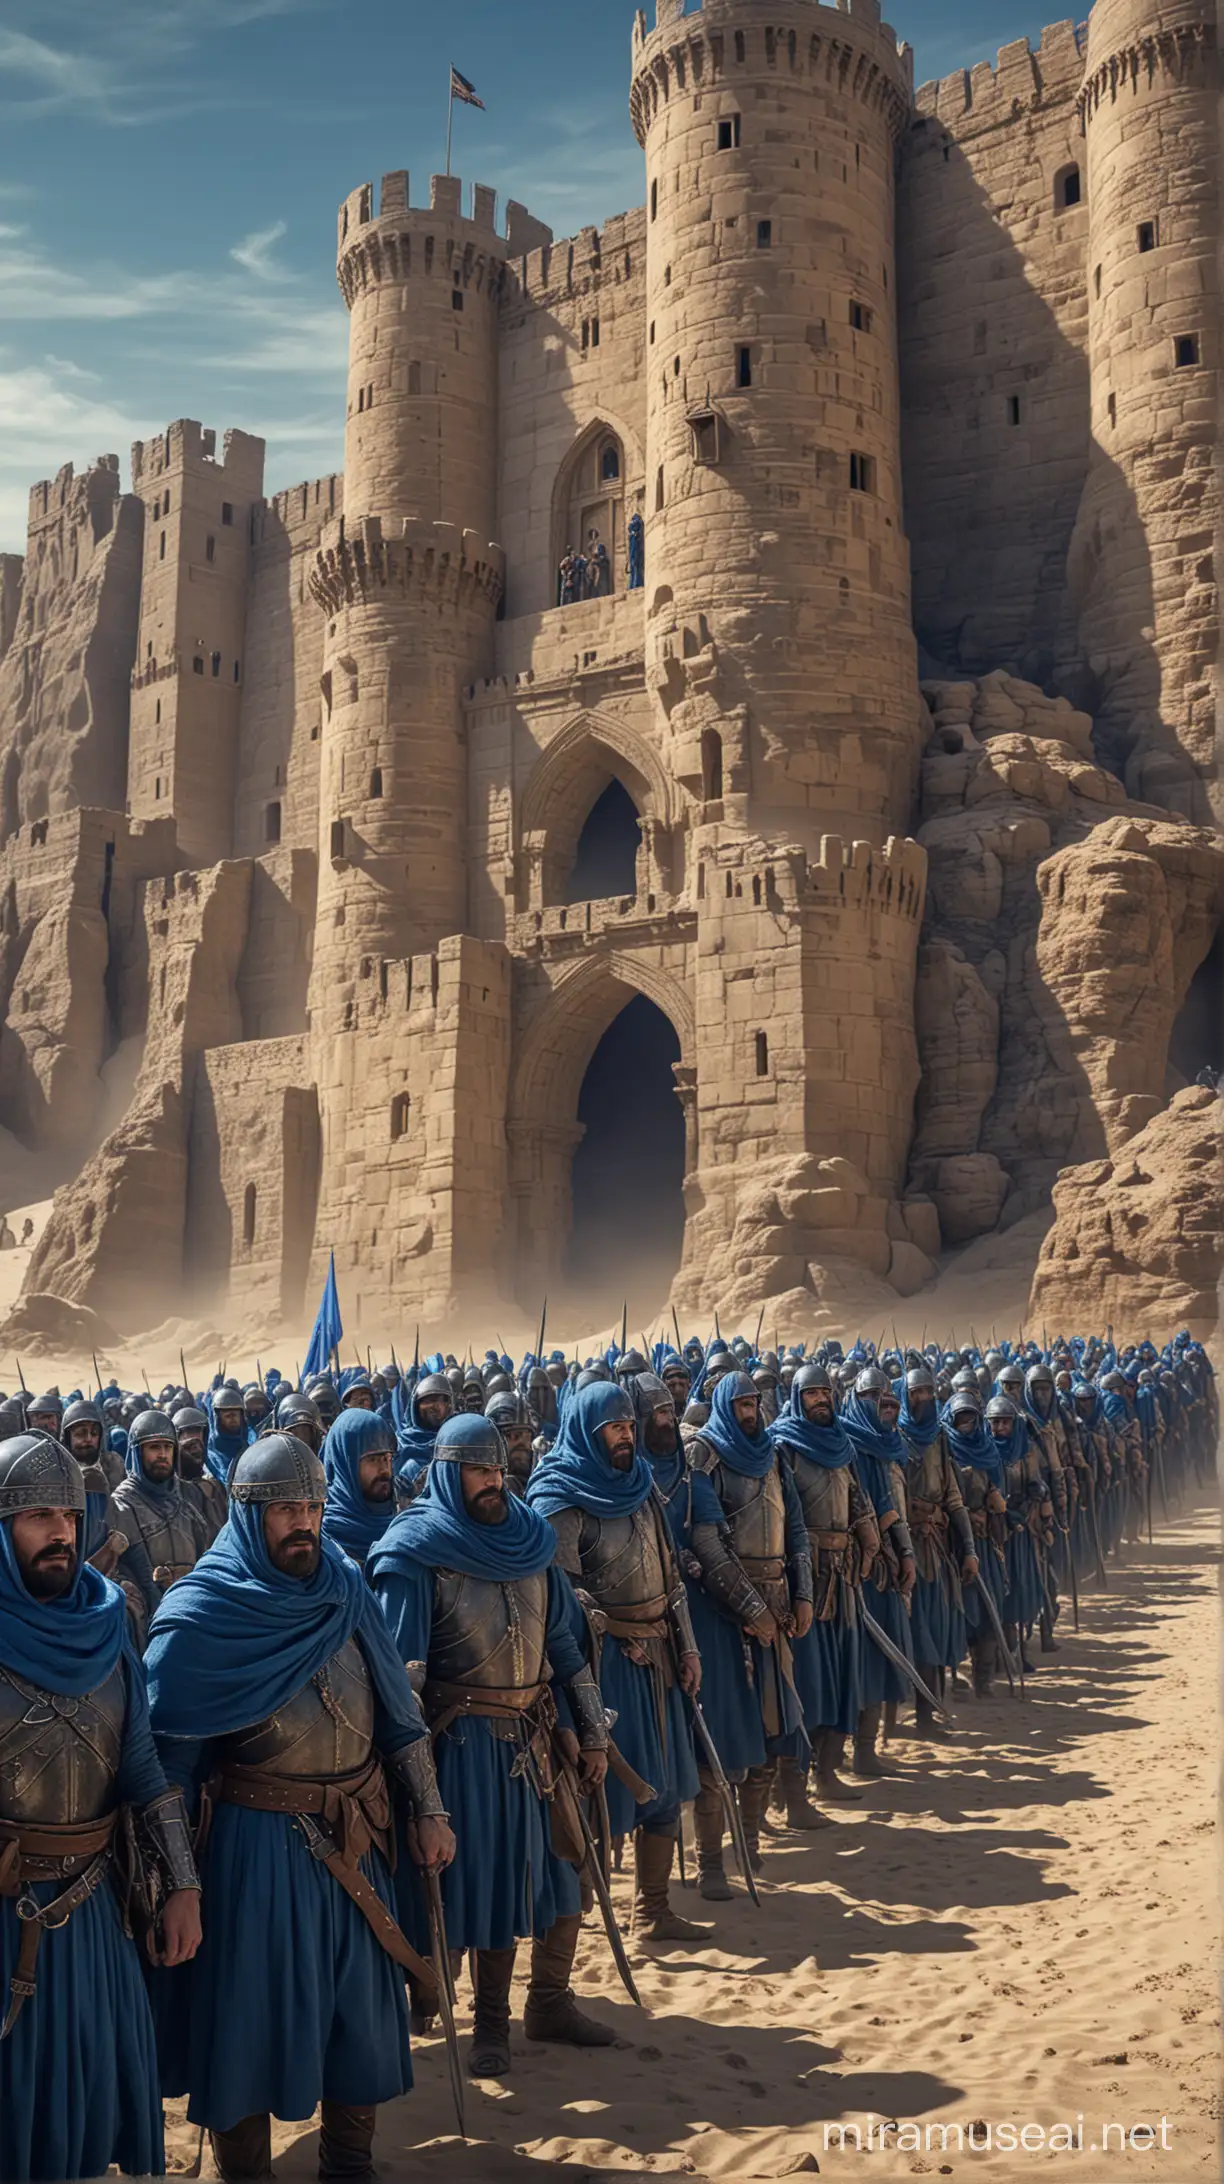 Medieval Warriors in Blue Battle Attire at Desert Castle